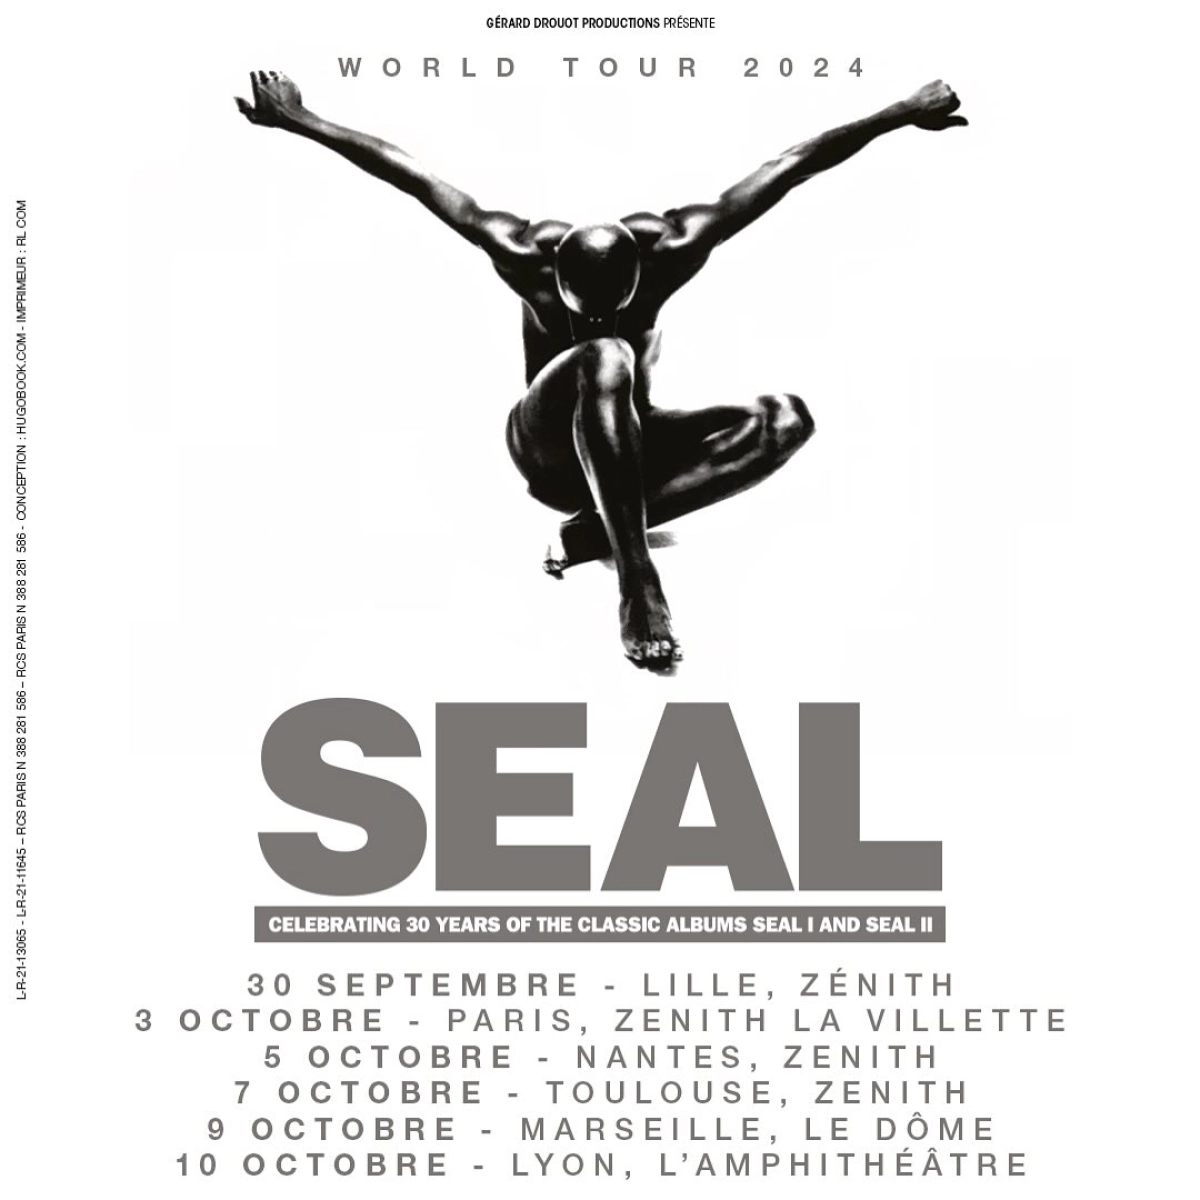 Seal at L'amphitheatre Tickets